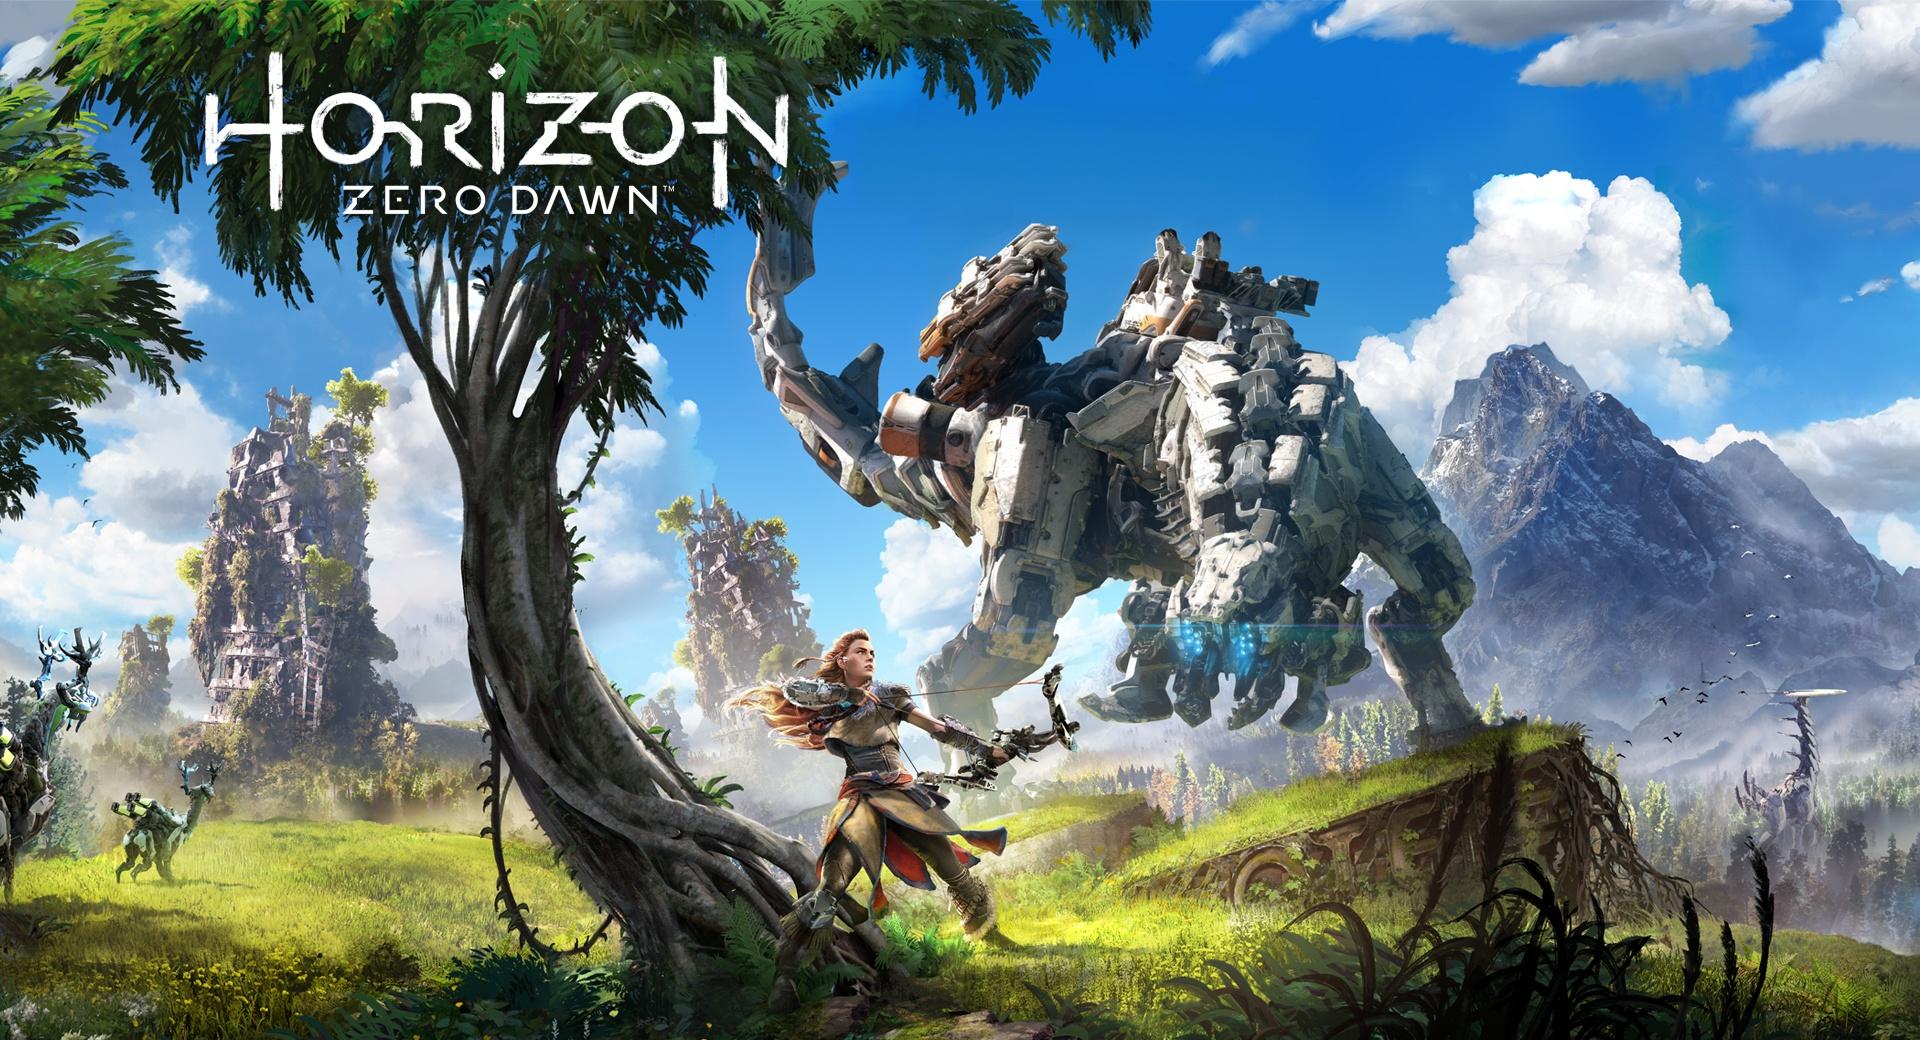 Horizon Zero Dawn 2017 Video Game at 1024 x 1024 iPad size wallpapers HD quality